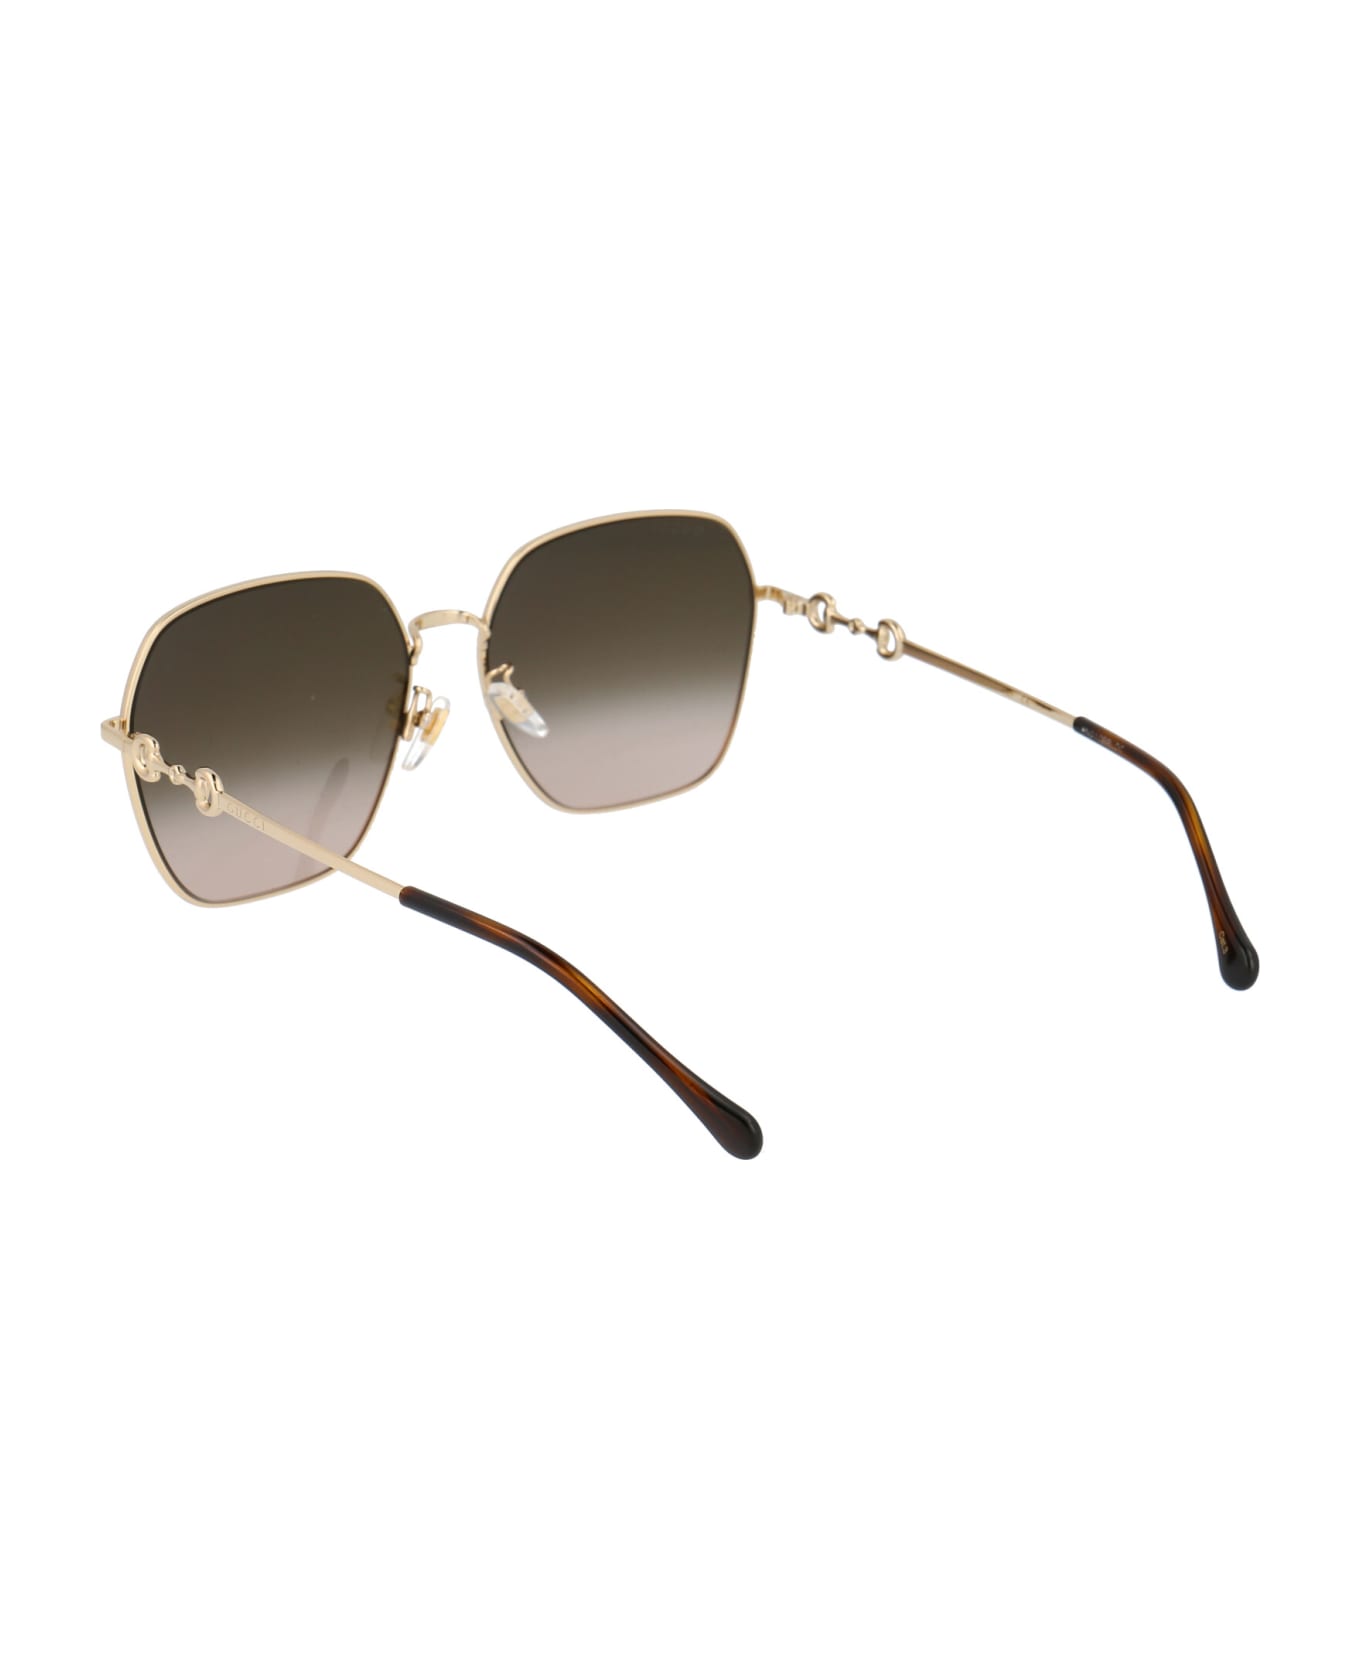 Gucci Eyewear Gg0882sa Sunglasses - 002 GOLD GOLD BROWN サングラス